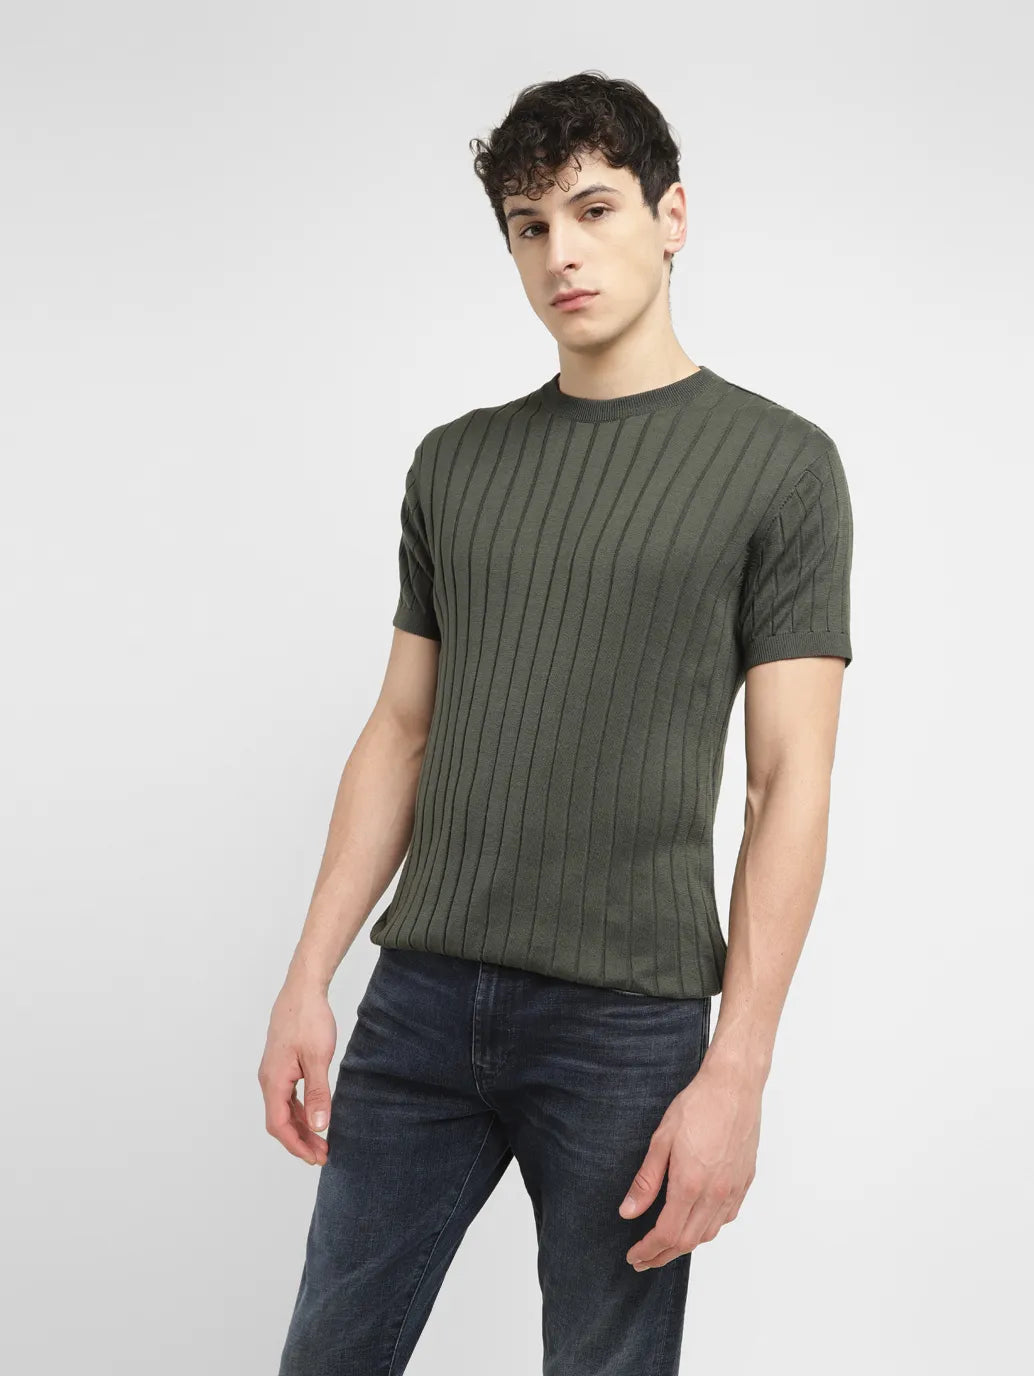 Men's Striped Olive Crew Neck Sweater